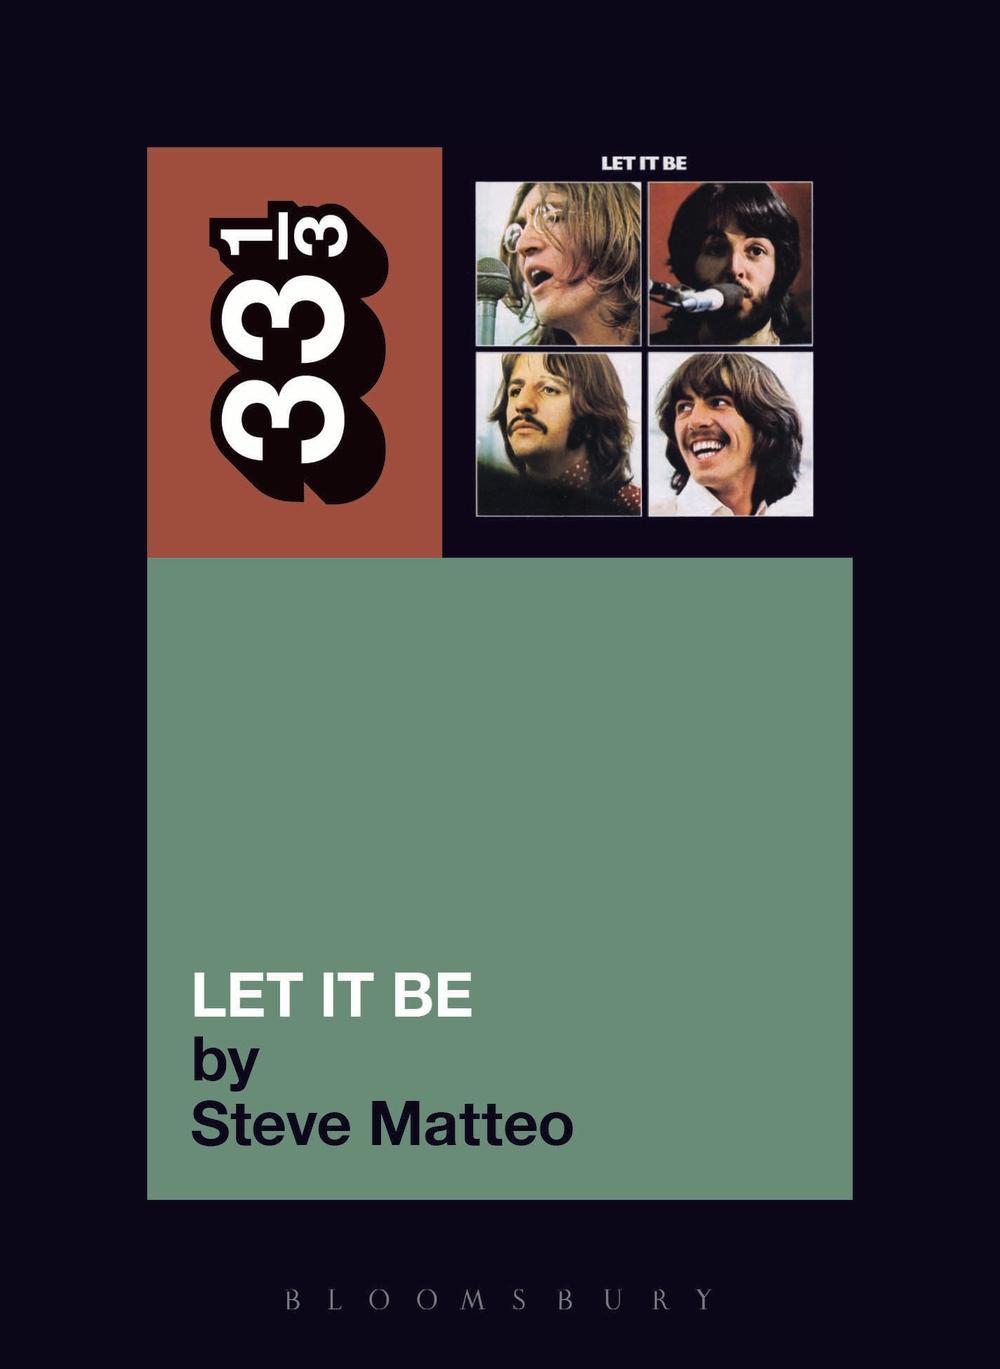 Beatles' Let it be